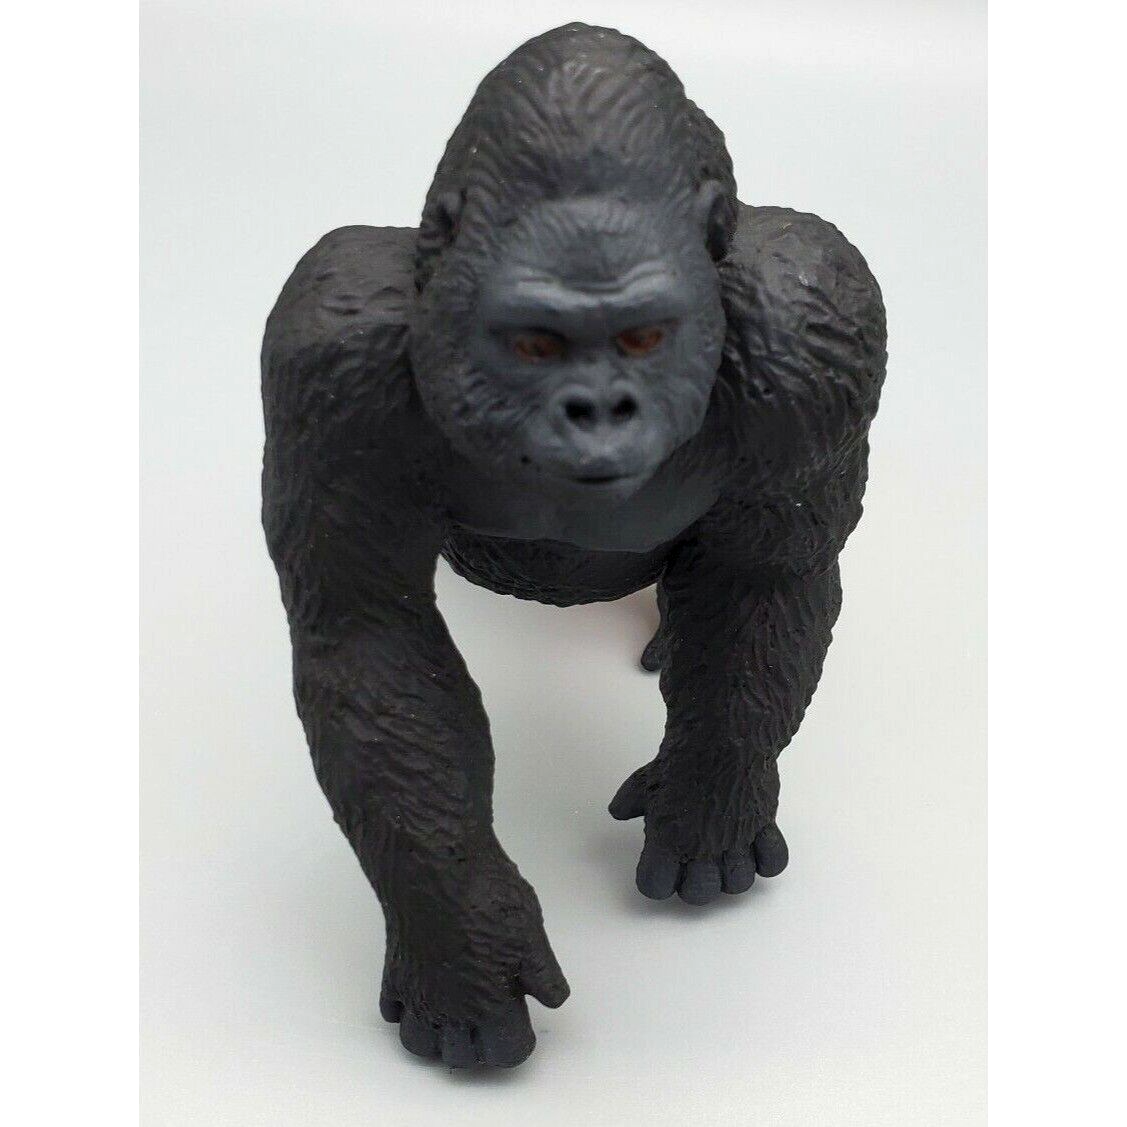 Primary image for 282829 Lowland Gorilla Wildlife Figure Safari Ltd 2005 Animal Toy 4"L w/Tag